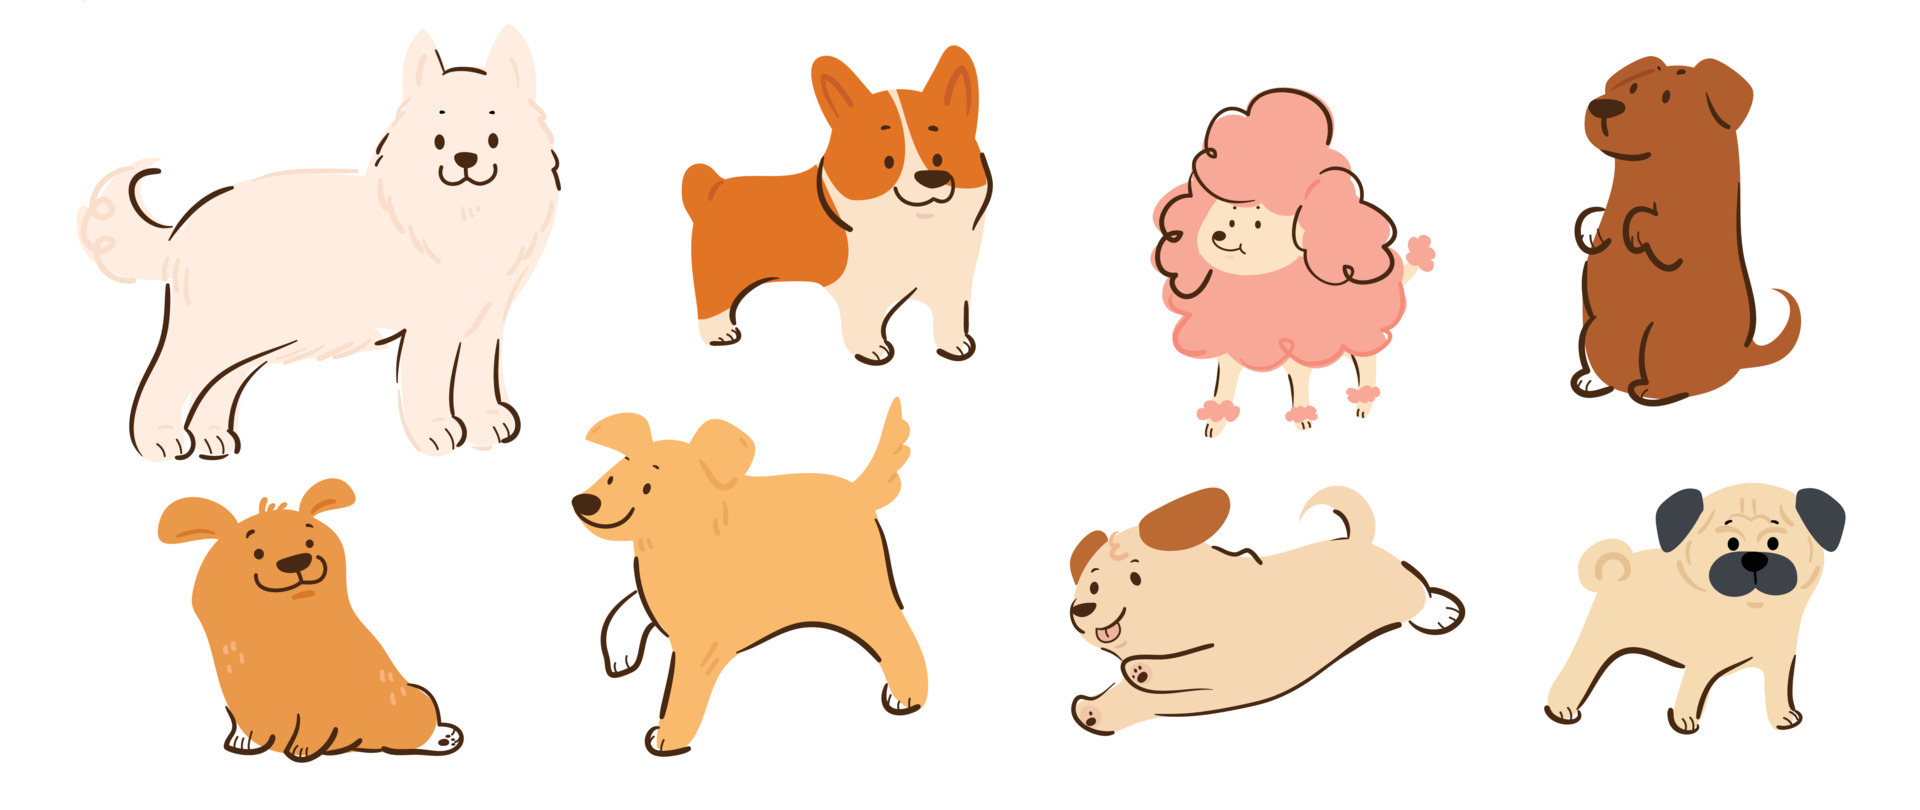 19 Dog slide ideas  dogs, doggy, cute dogs